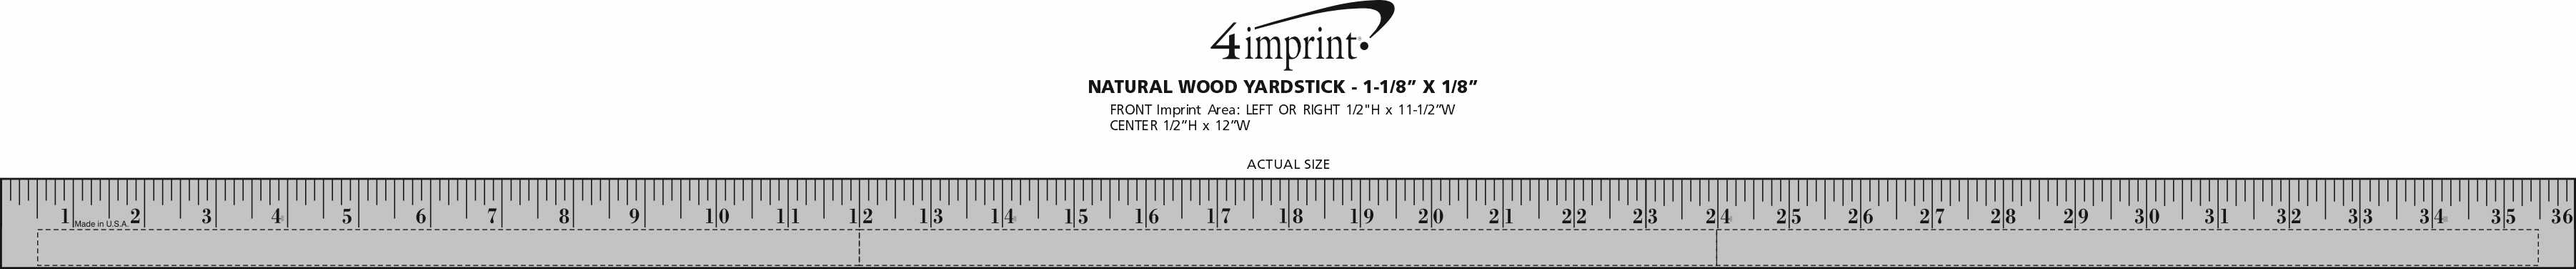 Imprint Area of Natural Wood Yardstick - 1-1/8” x 1/8”